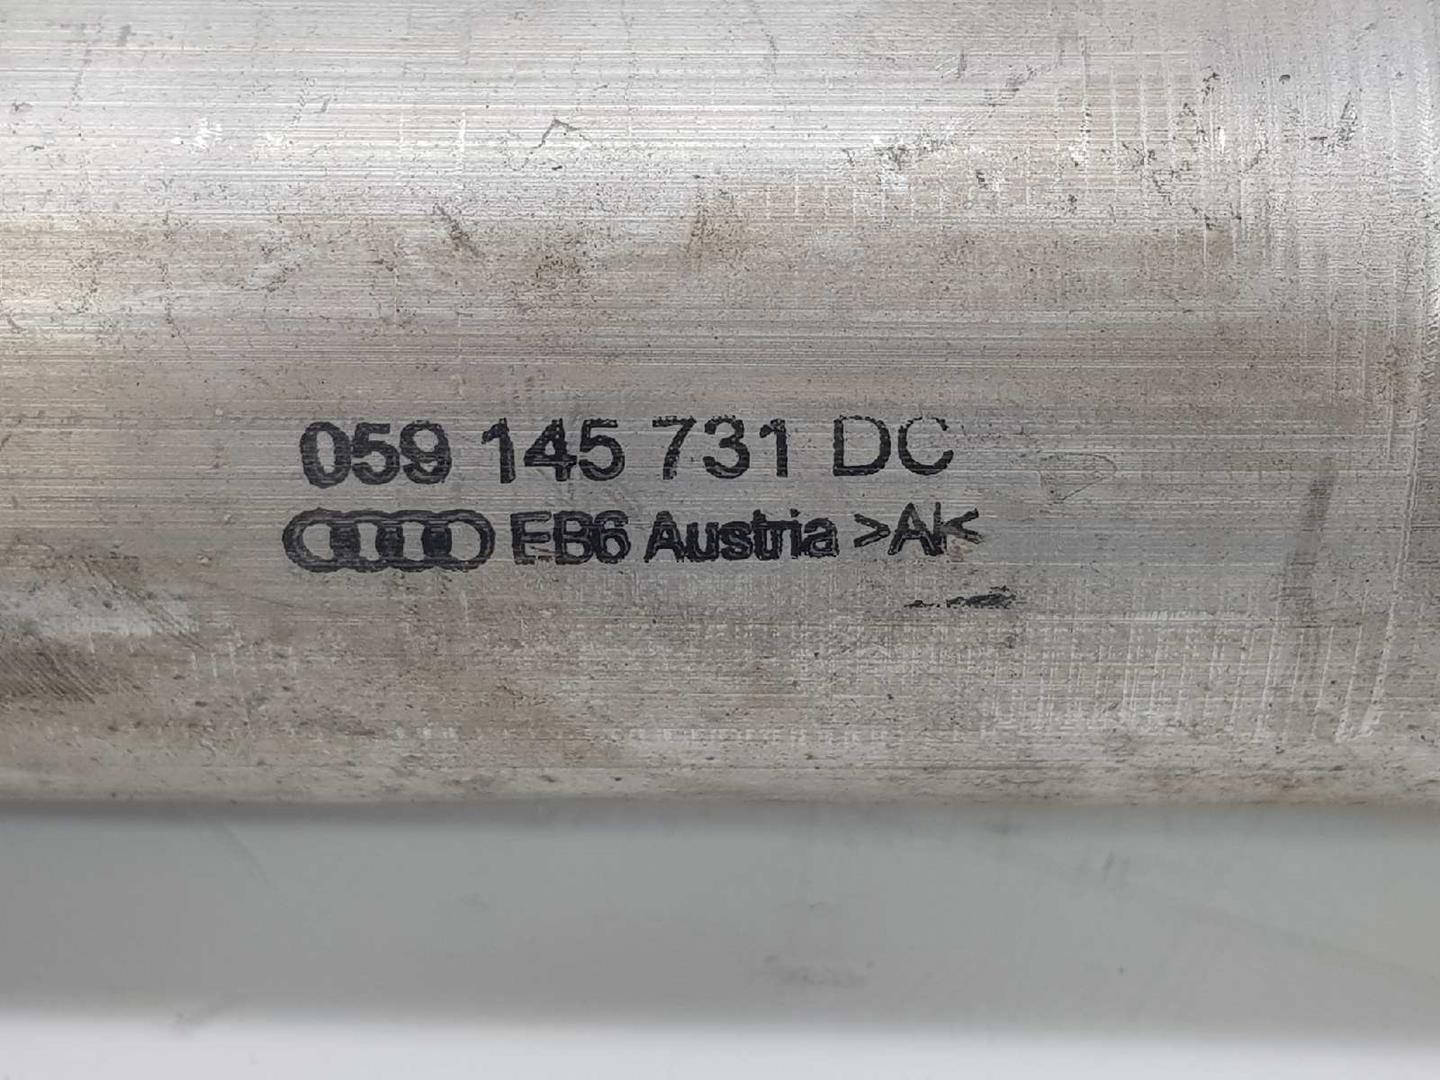 AUDI A7 C7/4G (2010-2020) шланг радиатора интеркулера 059145731DC, 059145731DC 19717784